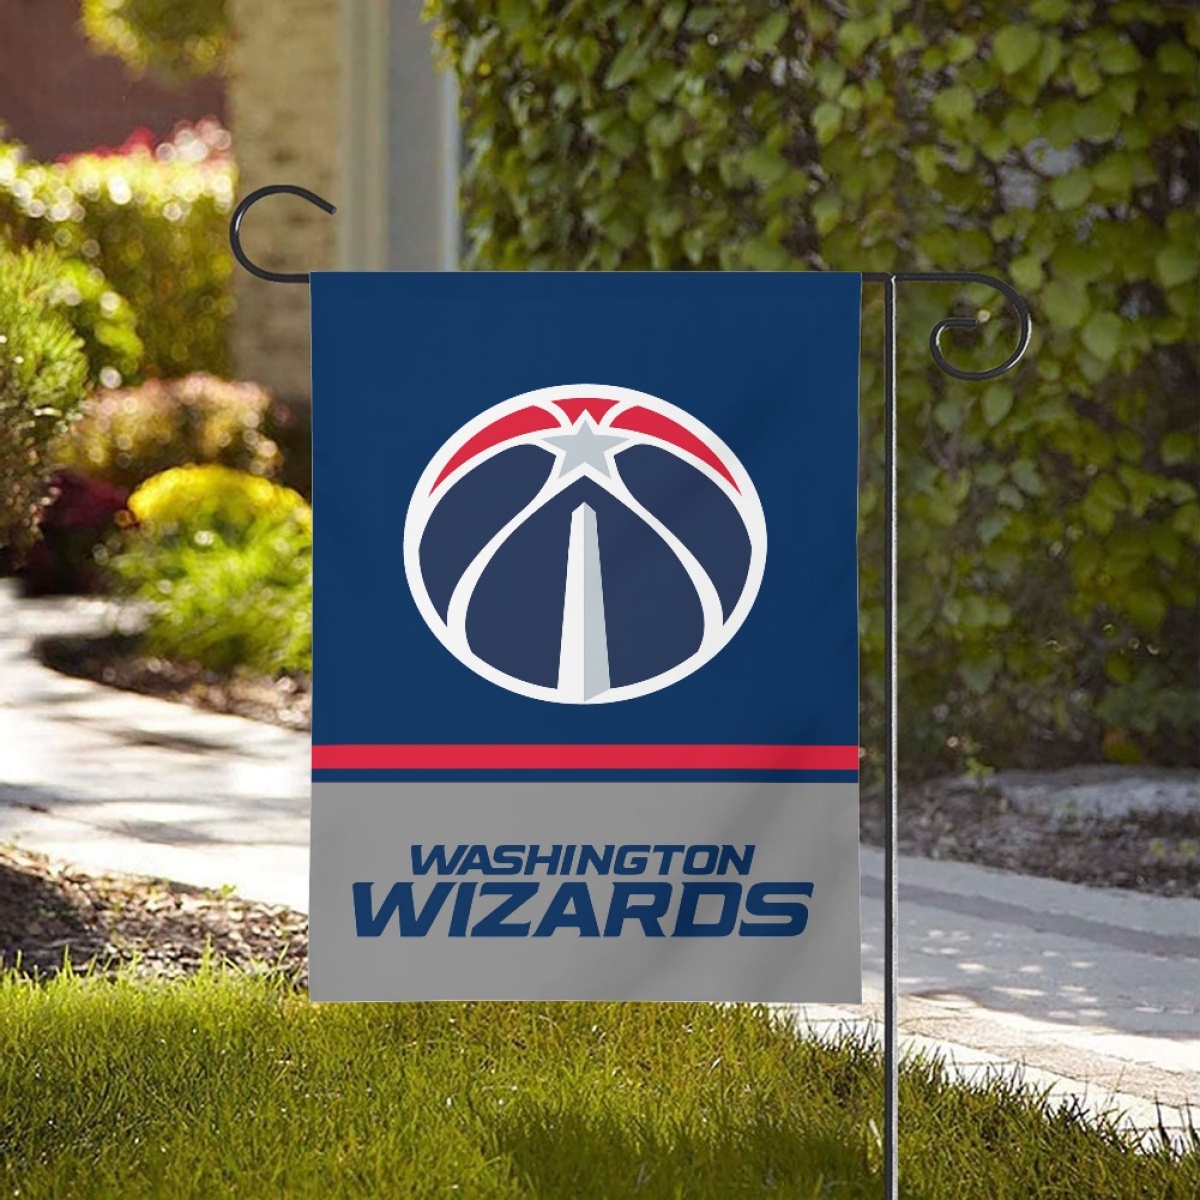 Washington Wizards Double-Sided Garden Flag 001 (Pls check description for details)